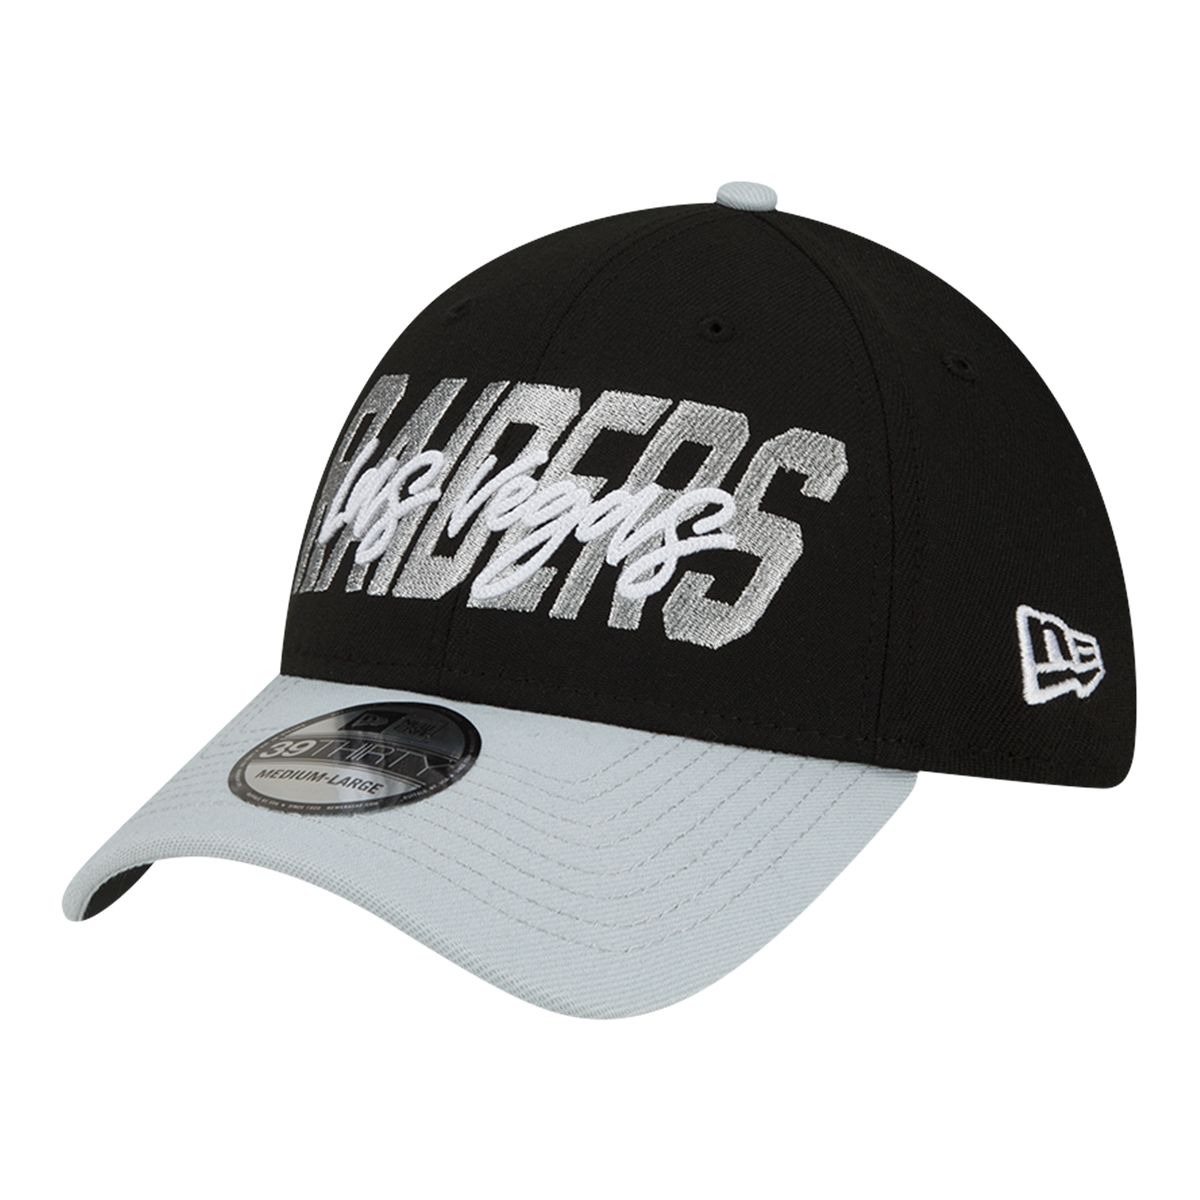 New Era Oakland Las Vegas Raiders Hat Visor One Size Fits All Black